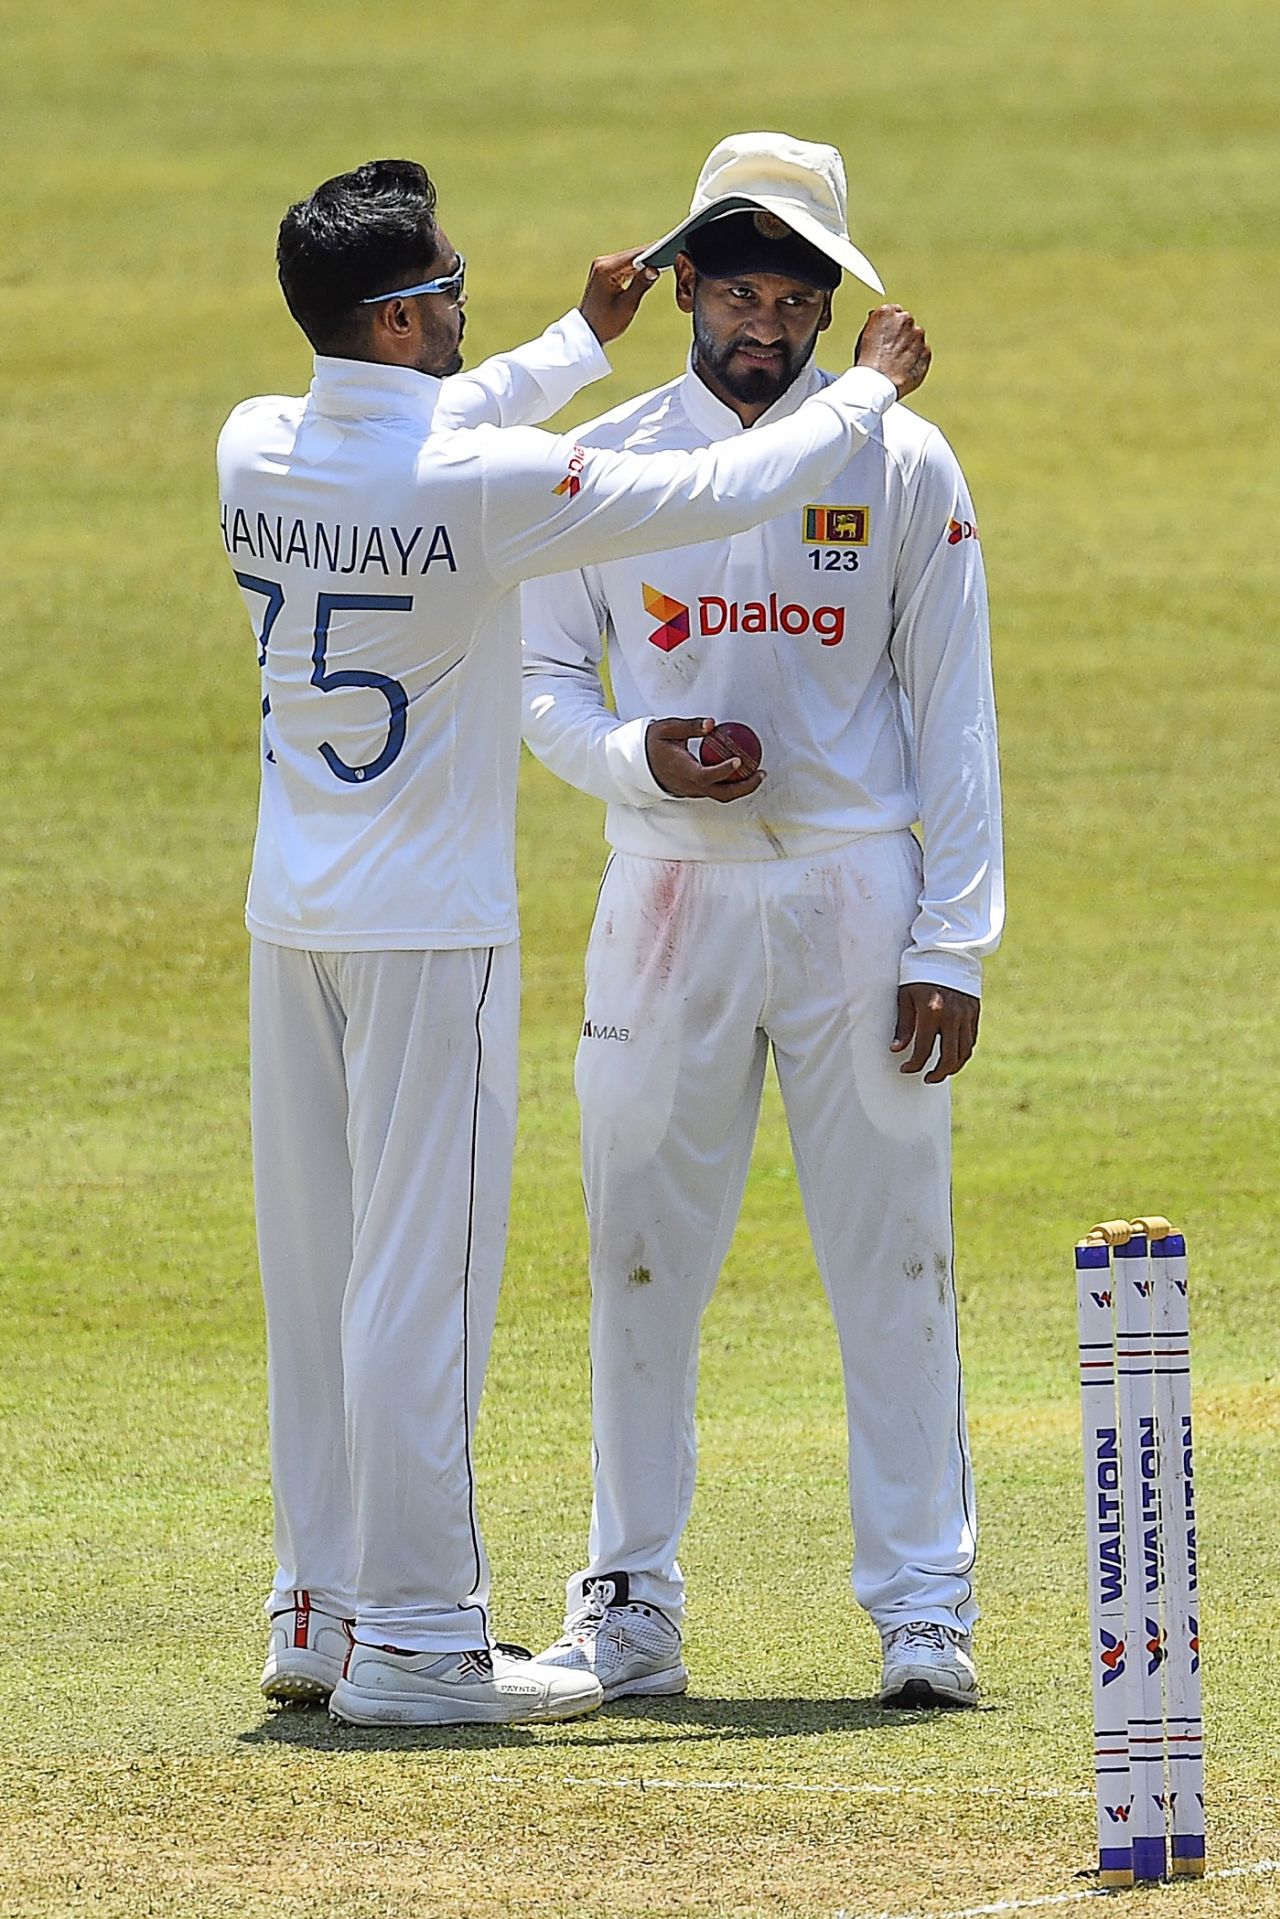 Dhananjaya de Silva puts a floppy hat on Dimuth Karunaratne's head, Sri Lanka vs Bangladesh, 1st Test, Pallekele, 2nd day, April 22, 2021